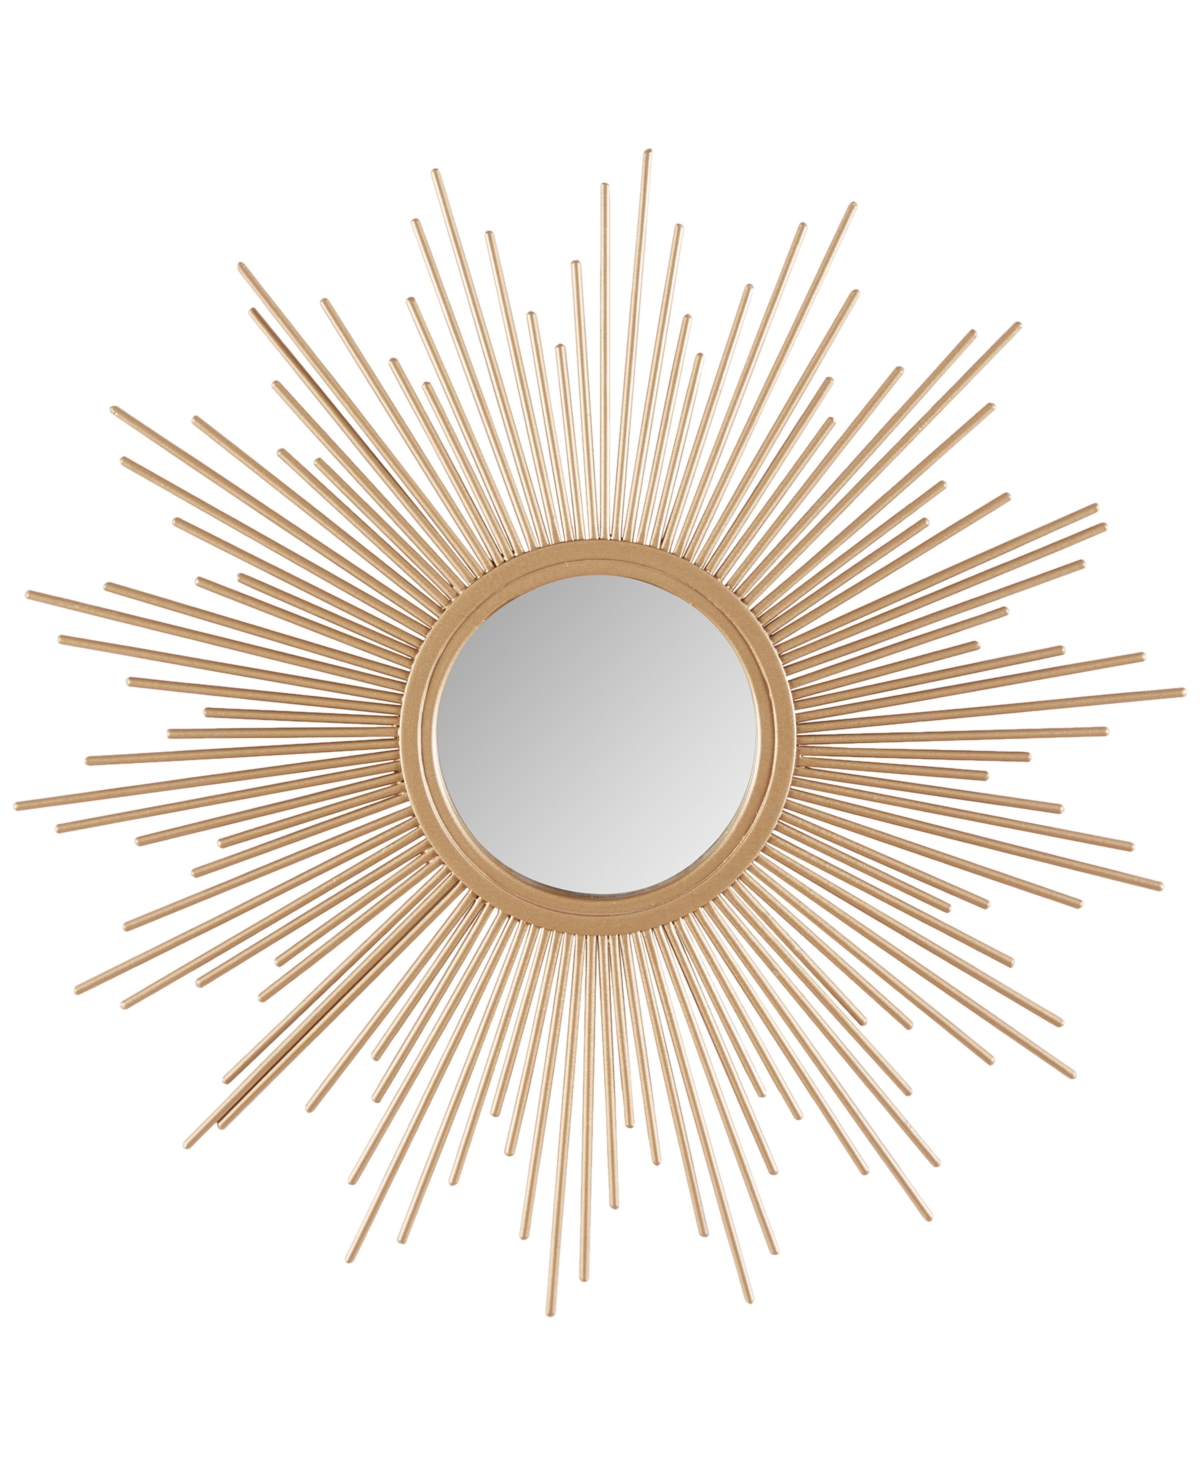 Madison Park Fiore Sunburst Small Mirror - Gold